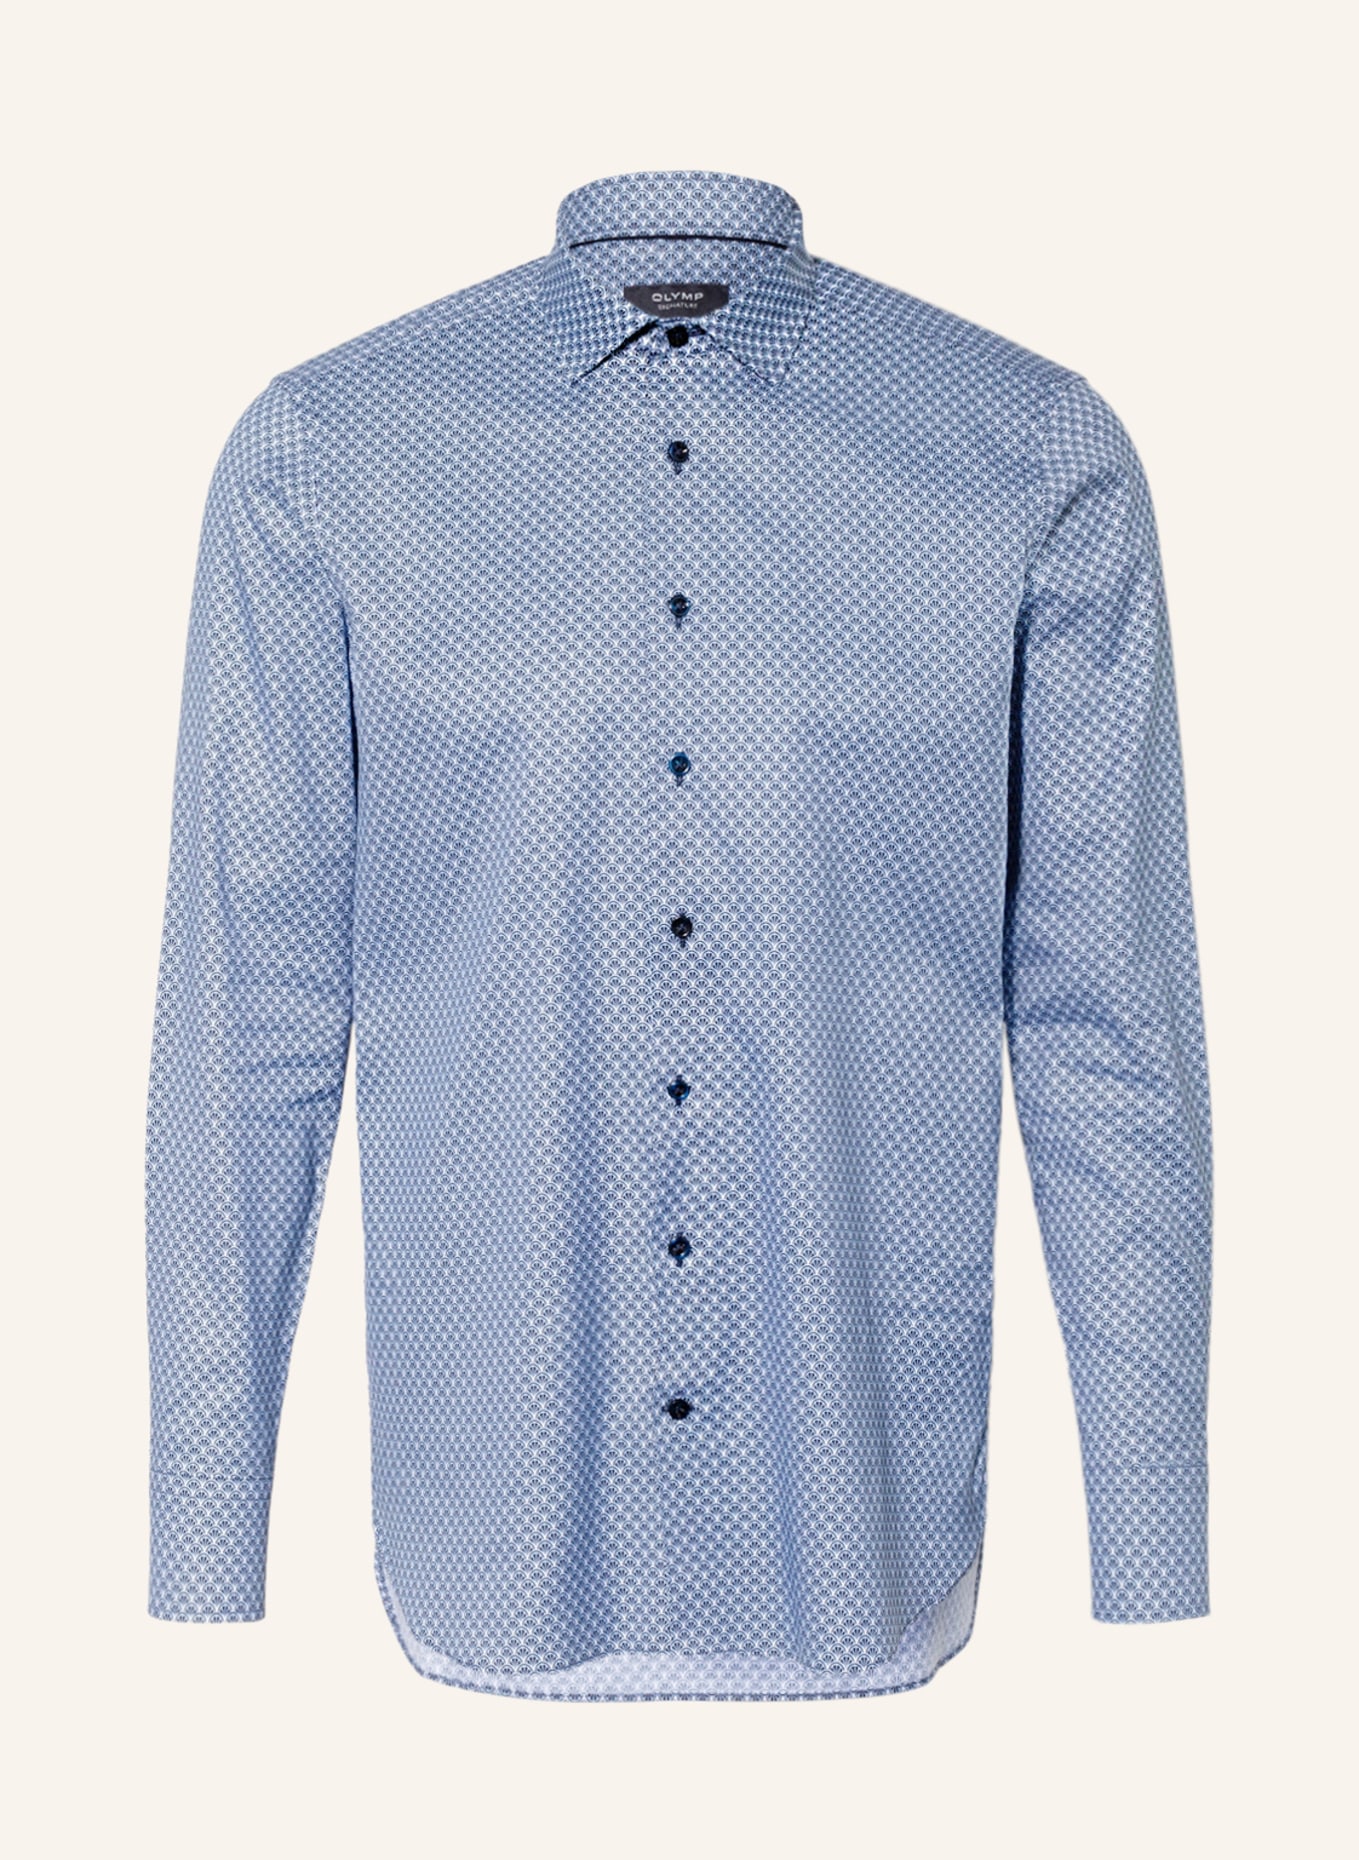 OLYMP SIGNATURE Hemd tailored fit in blau/ dunkelblau